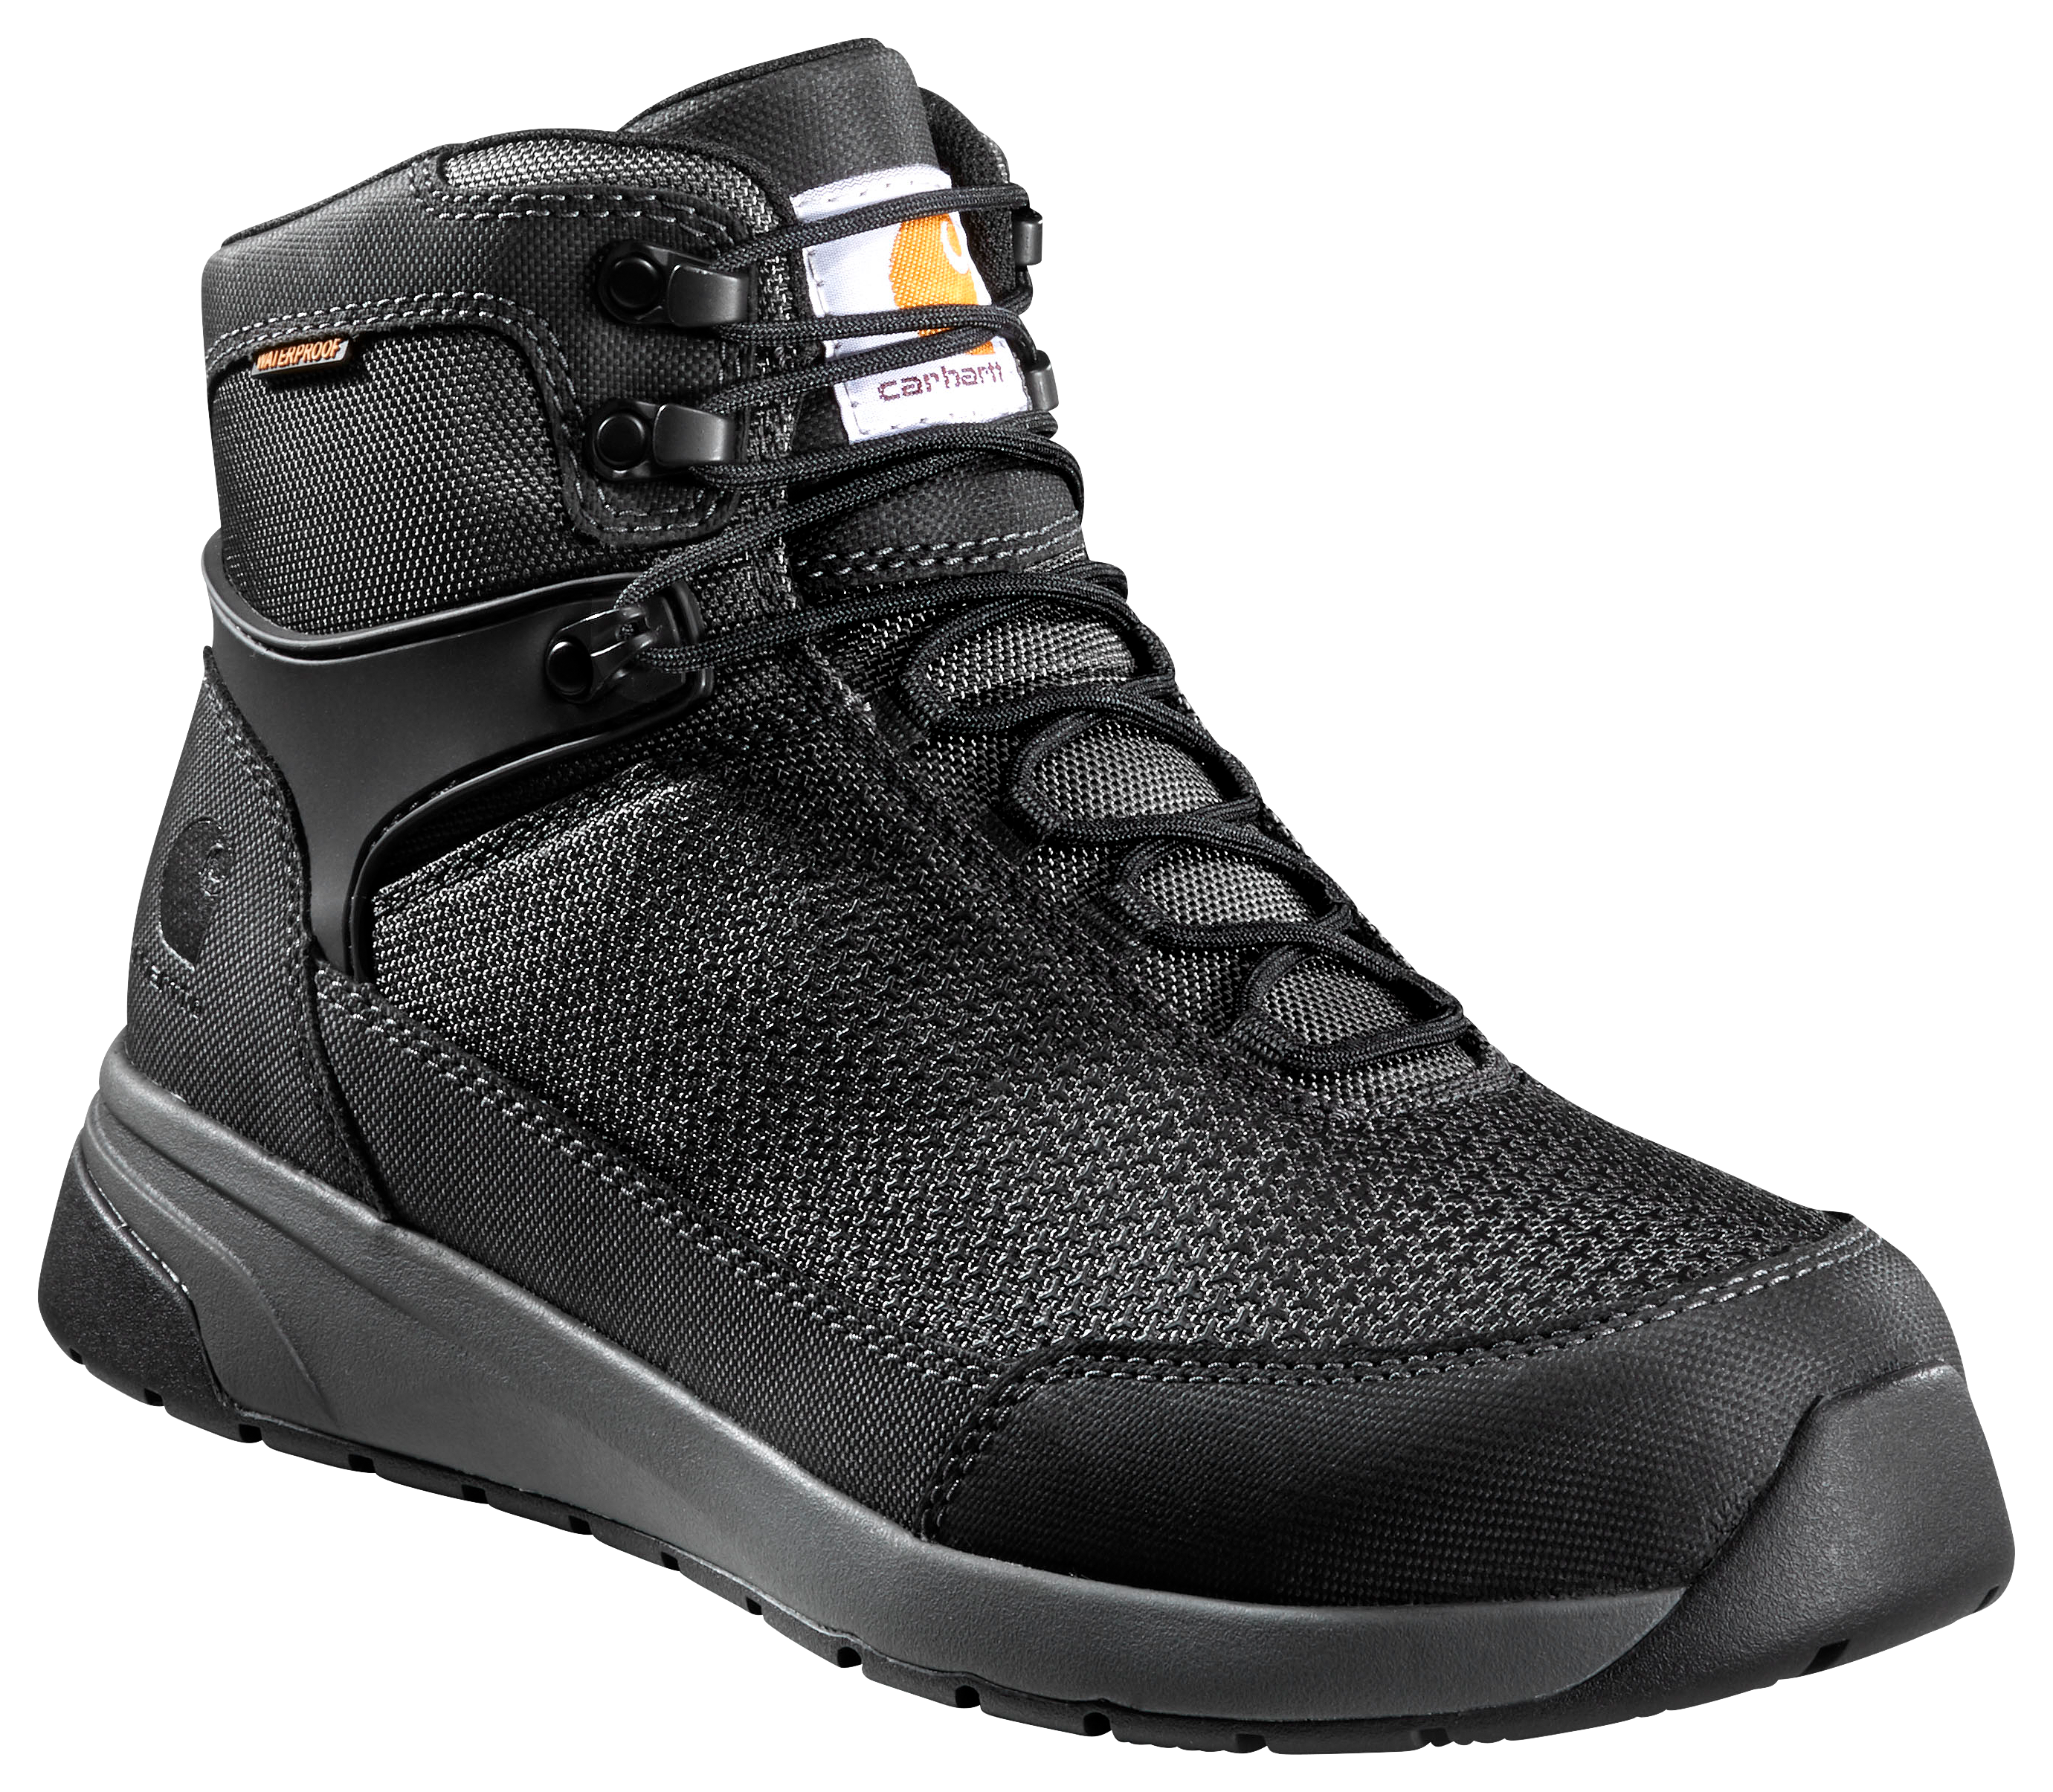 Carhartt Force 6"" Nano Composite-Toe Work Boots for Men - Black - 14M